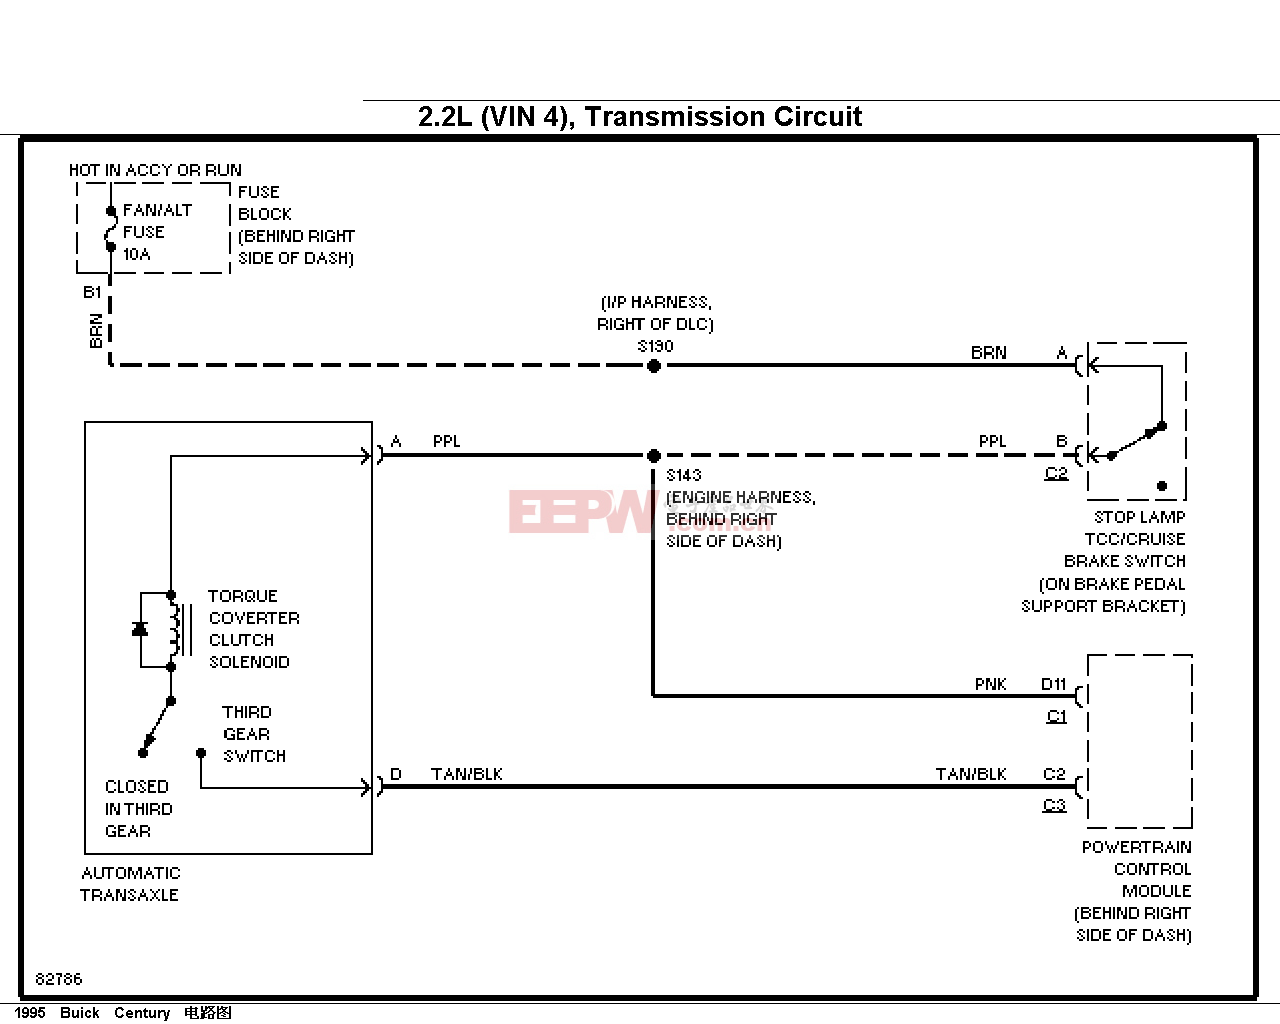 BUICK 95 century变速箱电路图（2.2l,vin4)